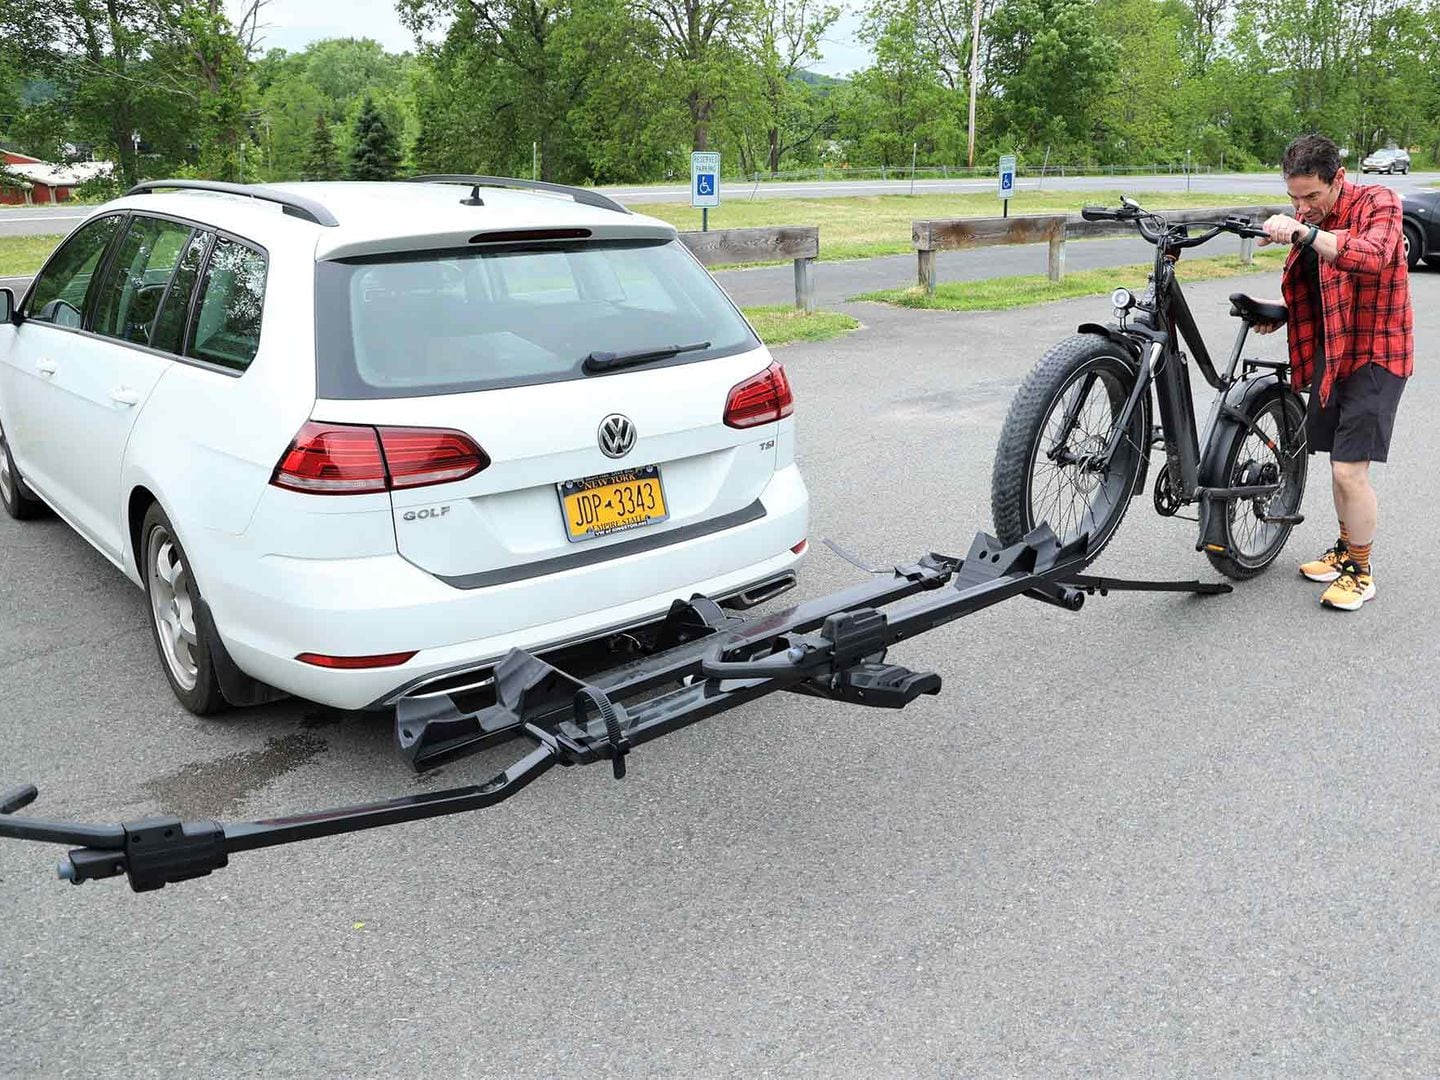 Heavy Duty Bike Rack With 6 Hooks - Capacity To Store 4 Bikes By Rad Sportz  : Target